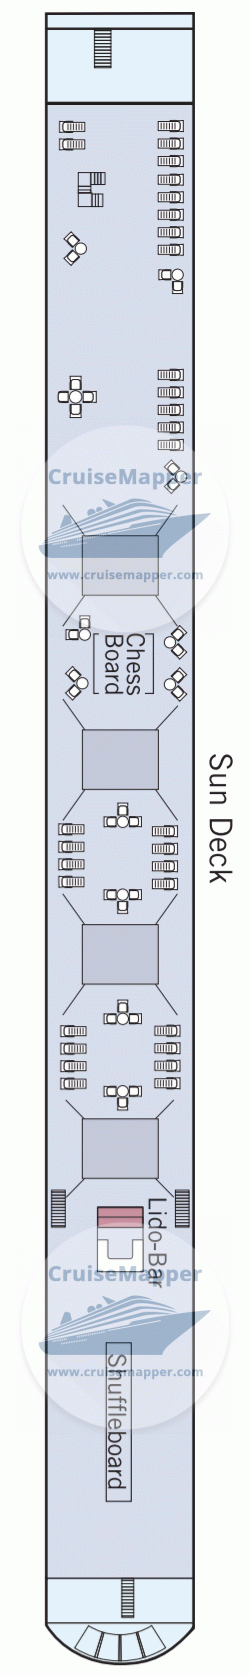 MS Amadeus Imperial Deck 04 - Sundeck